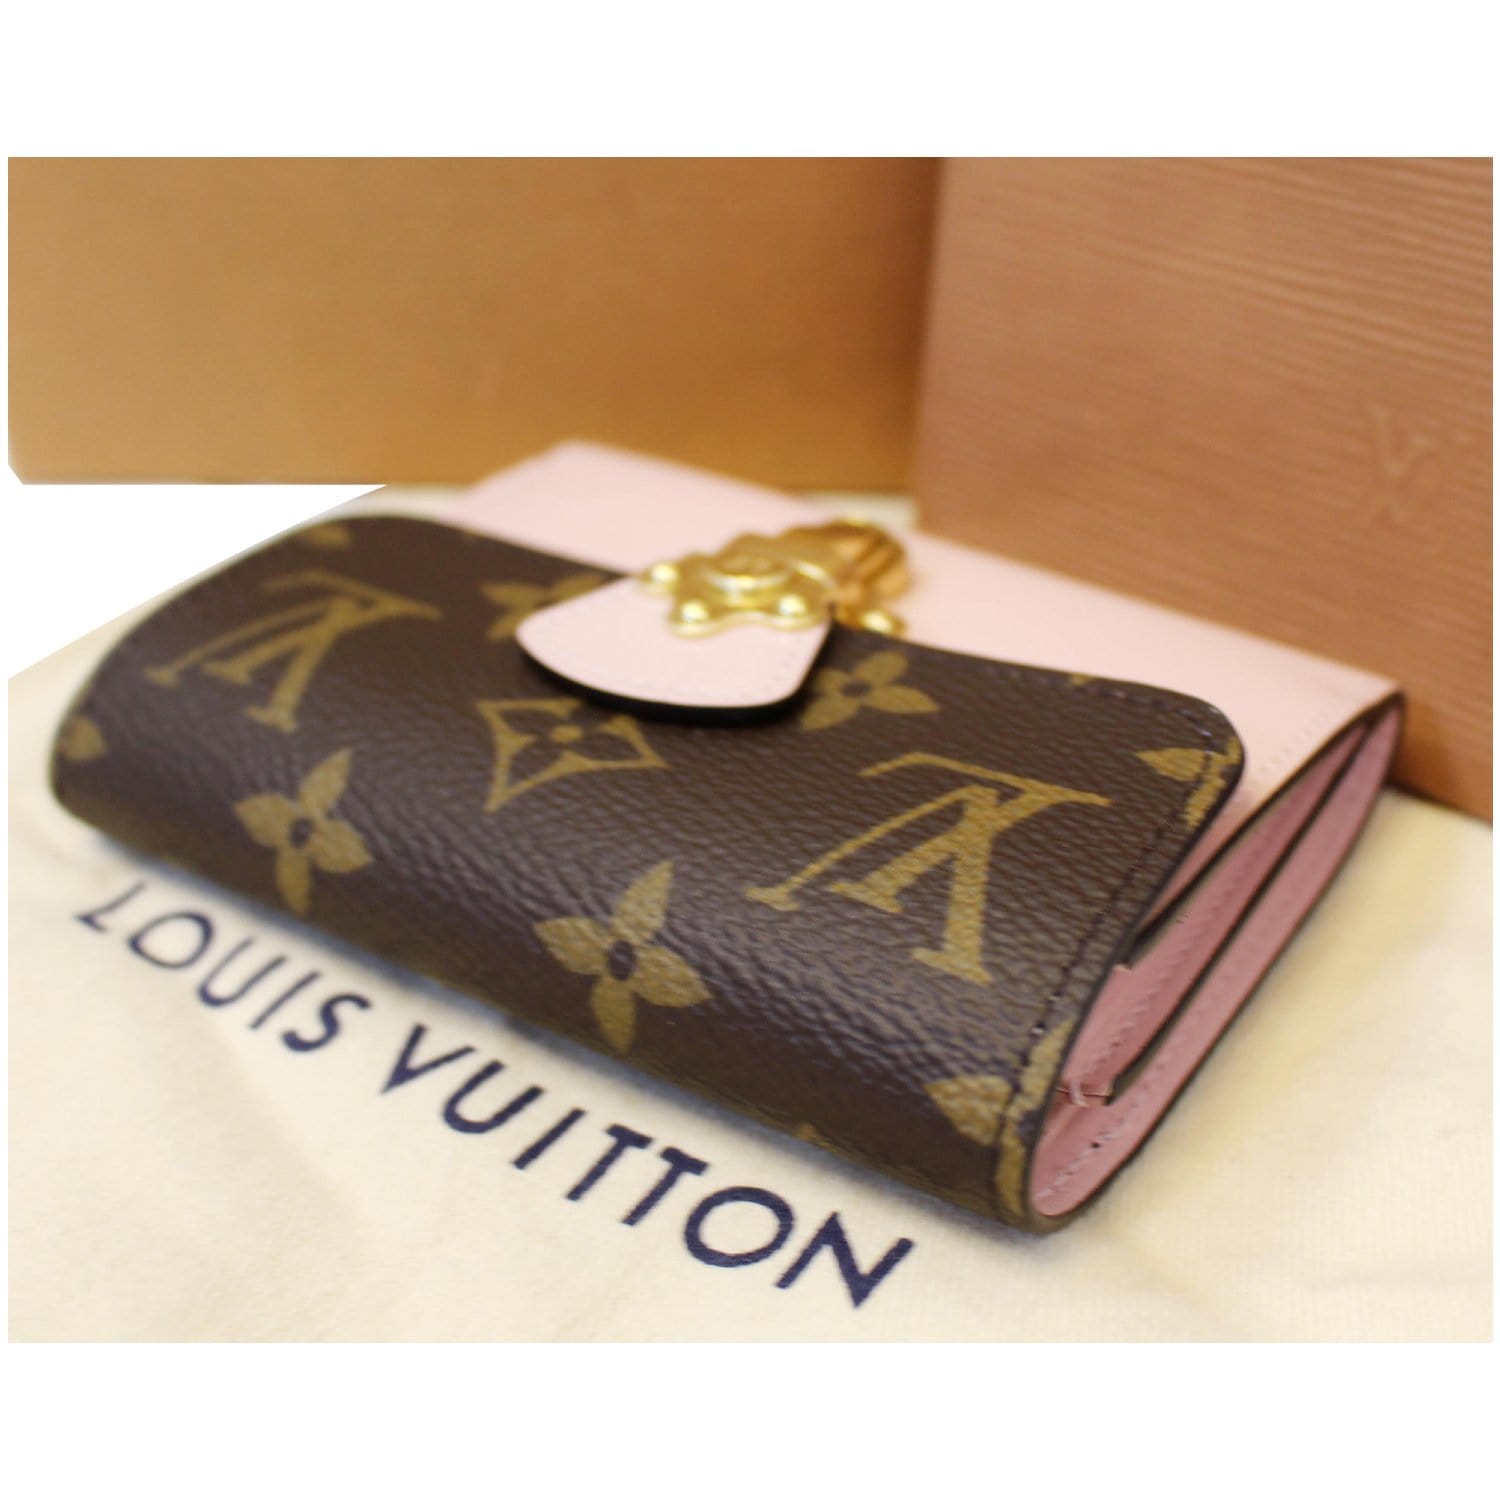 Louis Vuitton Rose Ballerine Vernis Monogram Cherrywood Compact